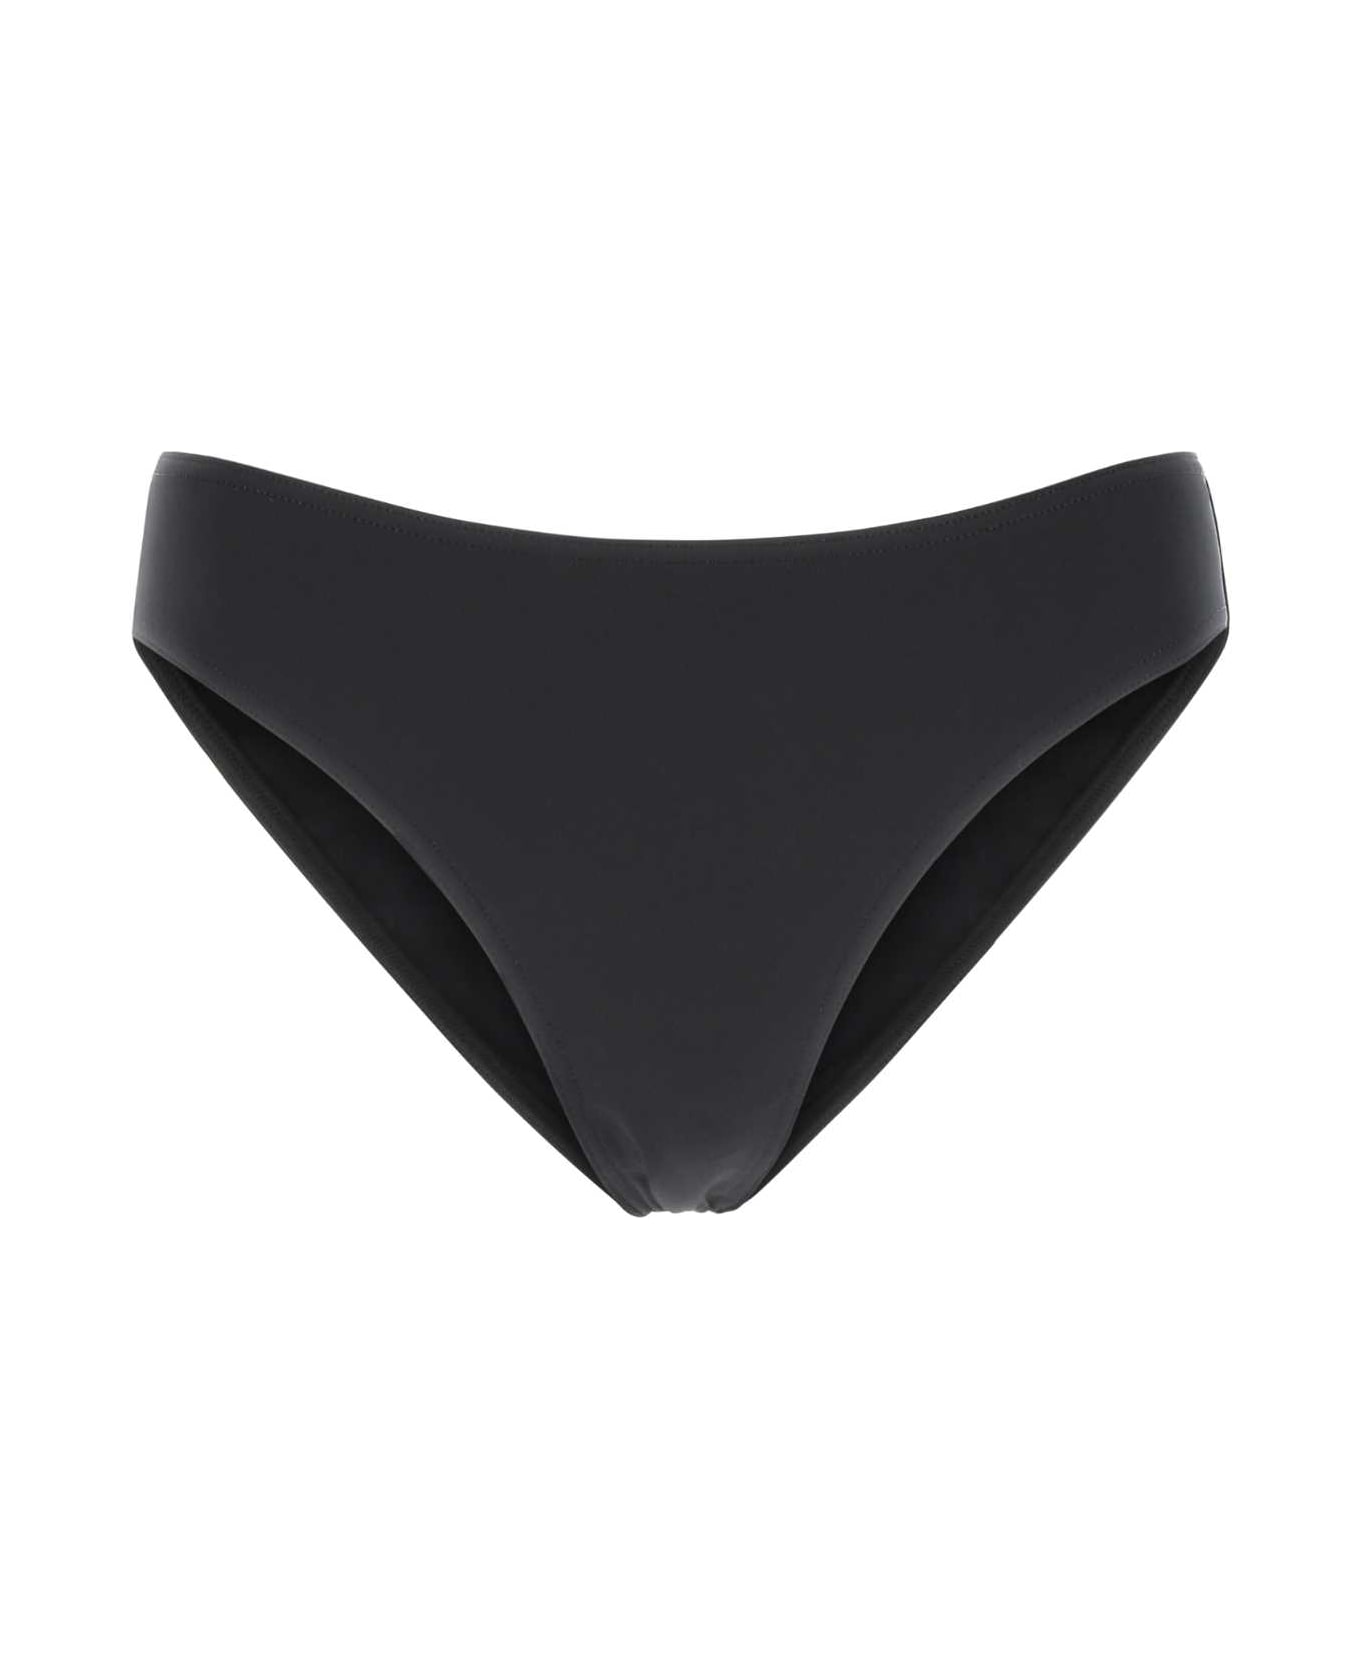 Eres Black Stretch Nylon Bikini Bottom - 018137